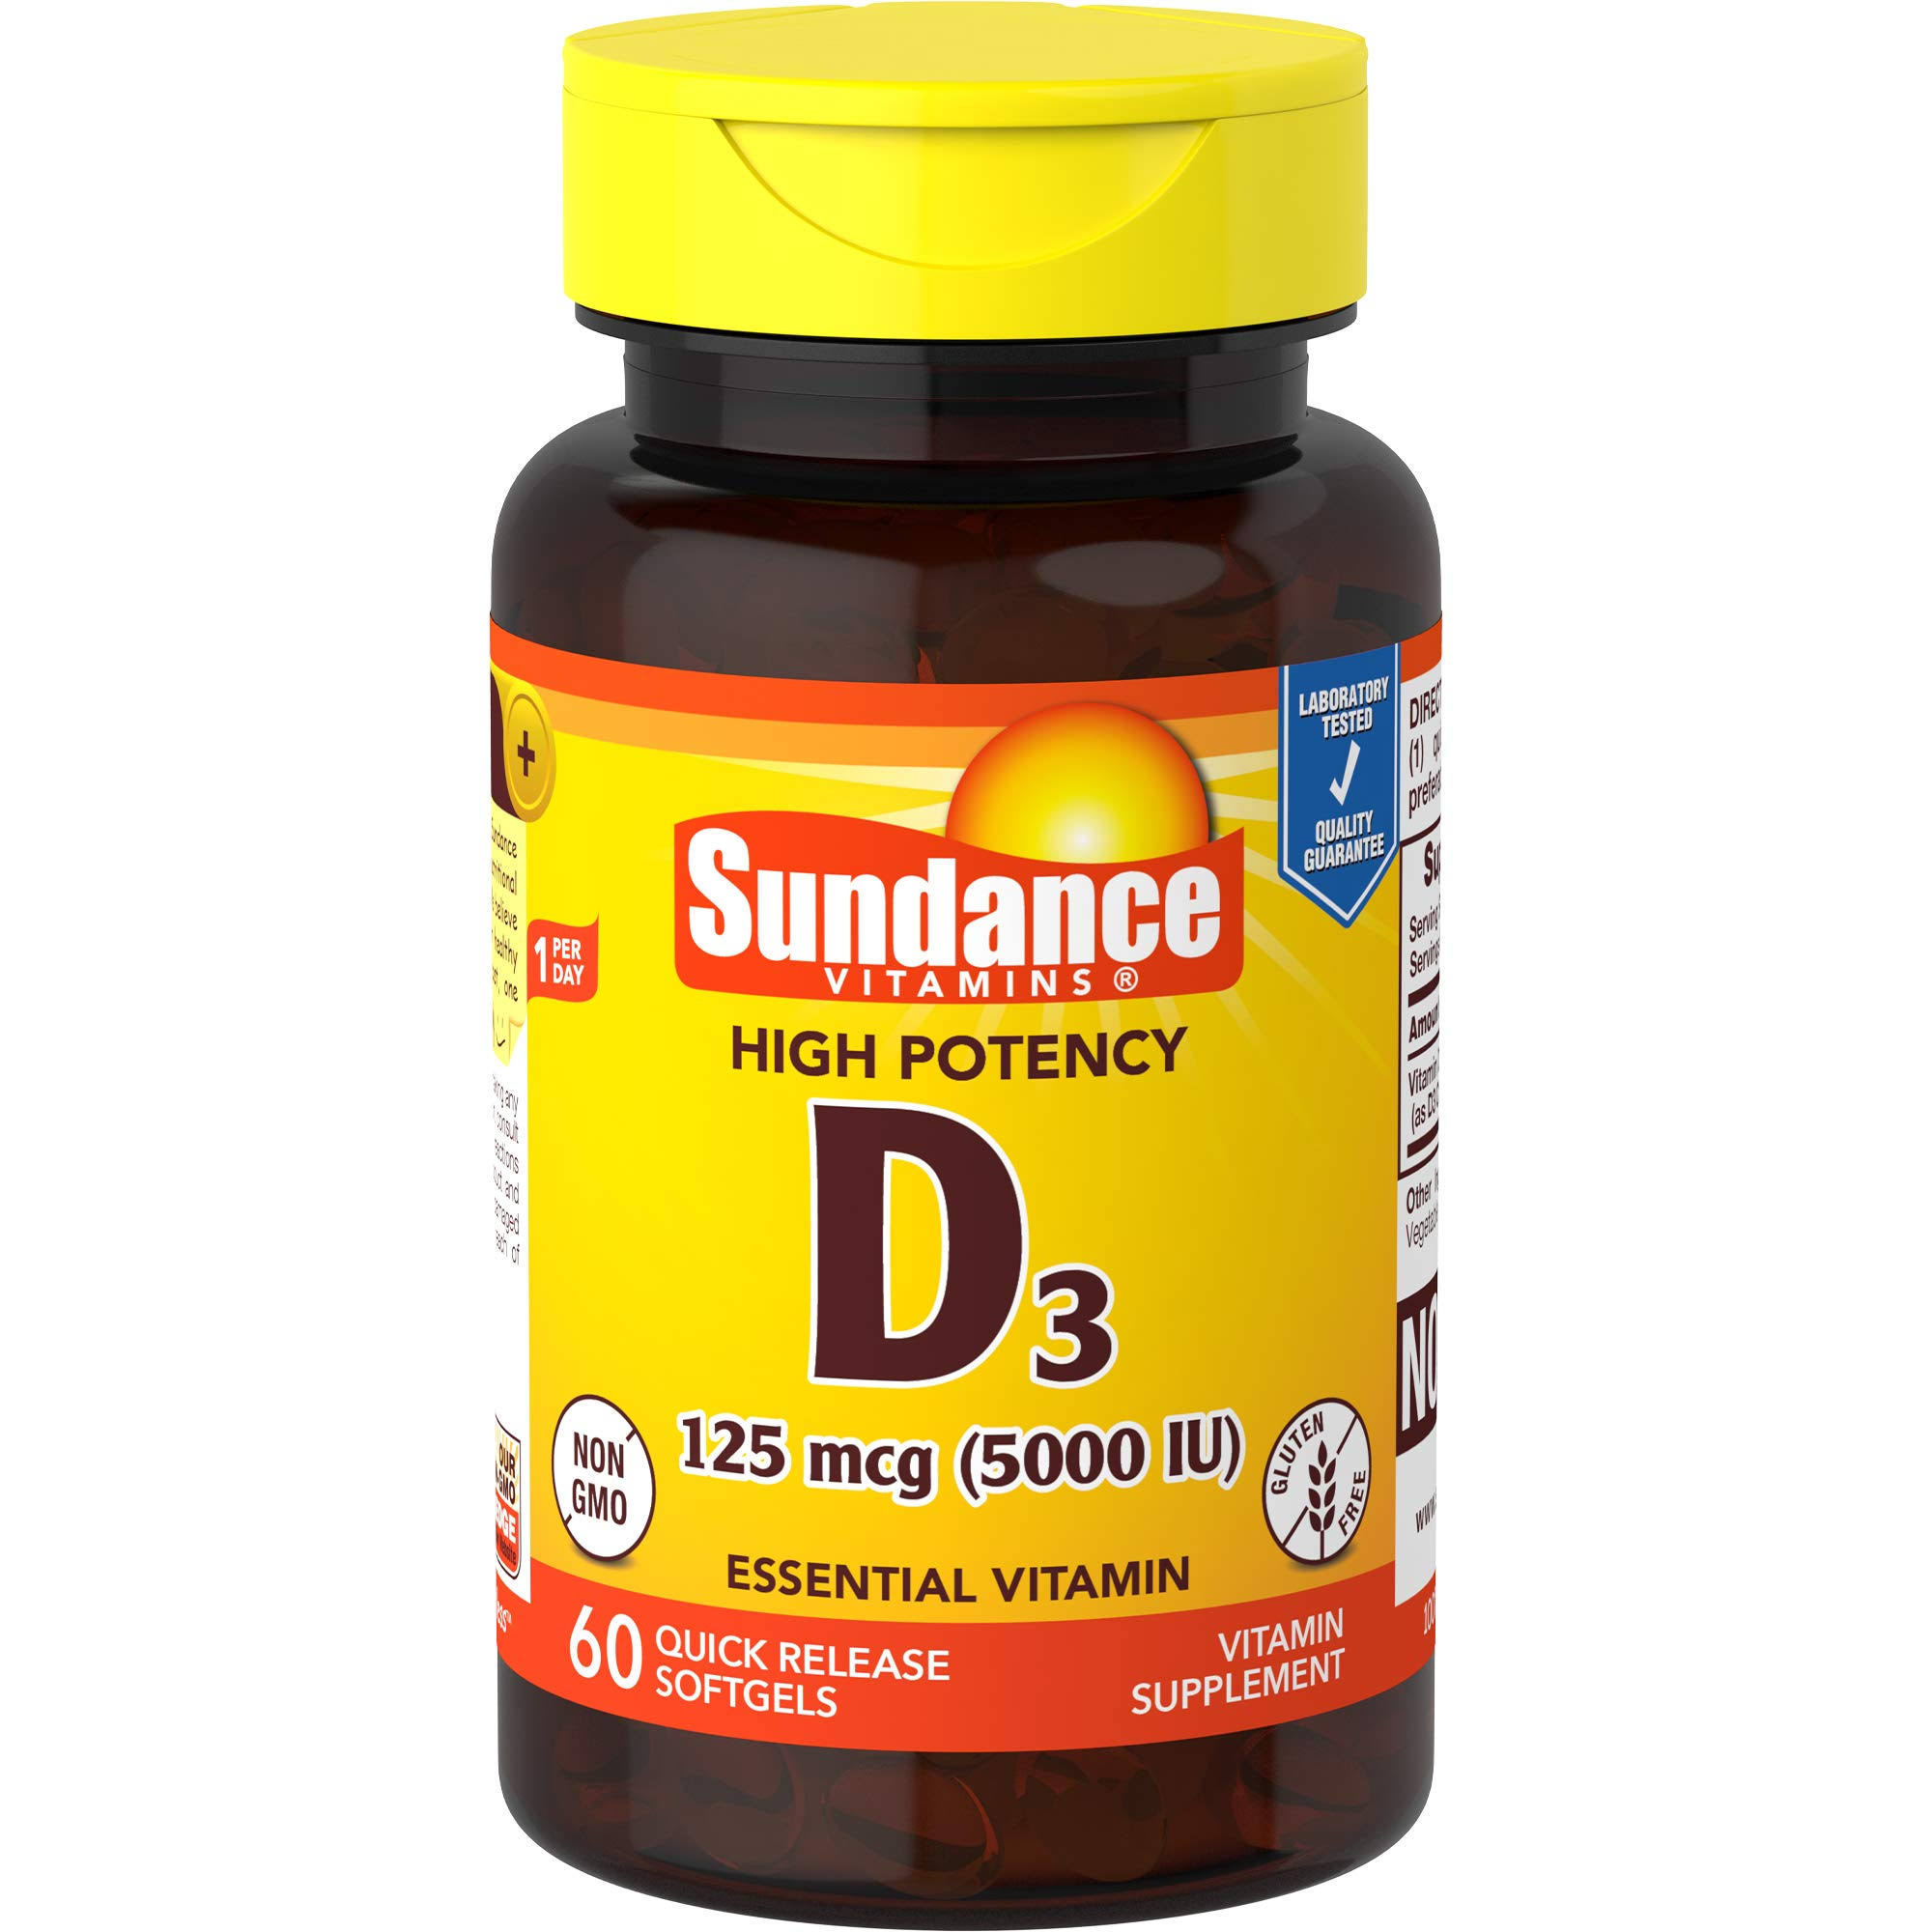 Sundance Vitamins High Potency Vitamin D3 5000 IU - 60ct